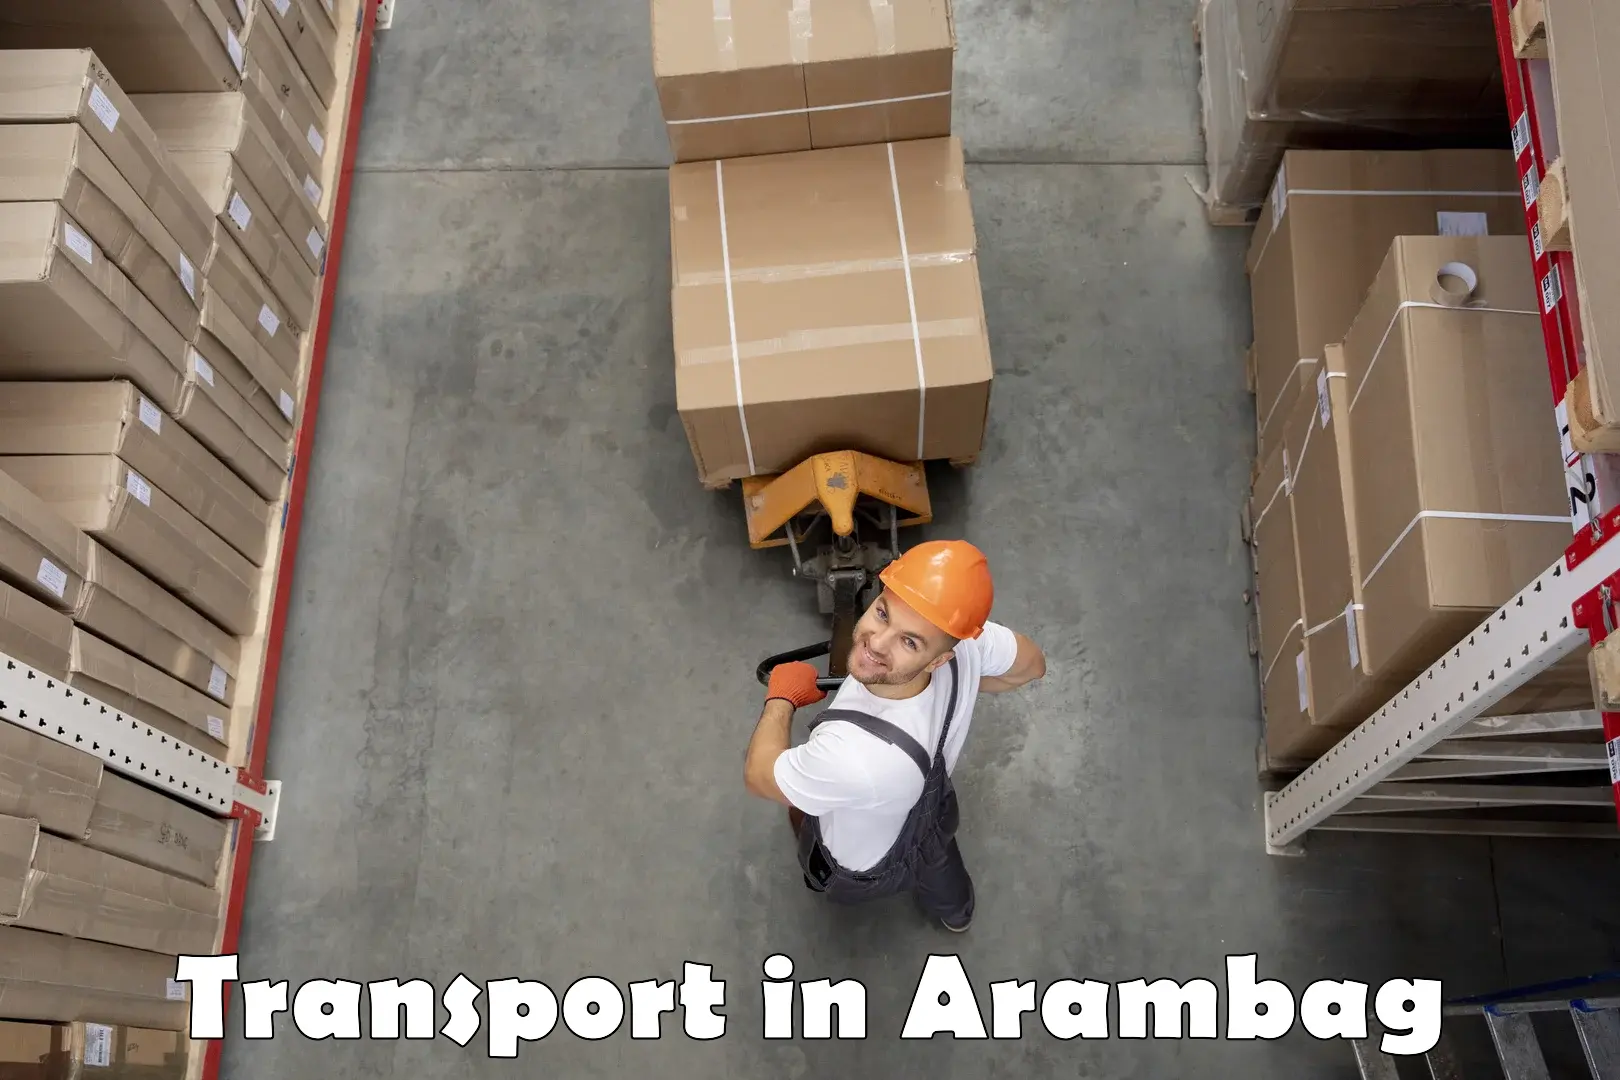 Cargo train transport services in Arambag